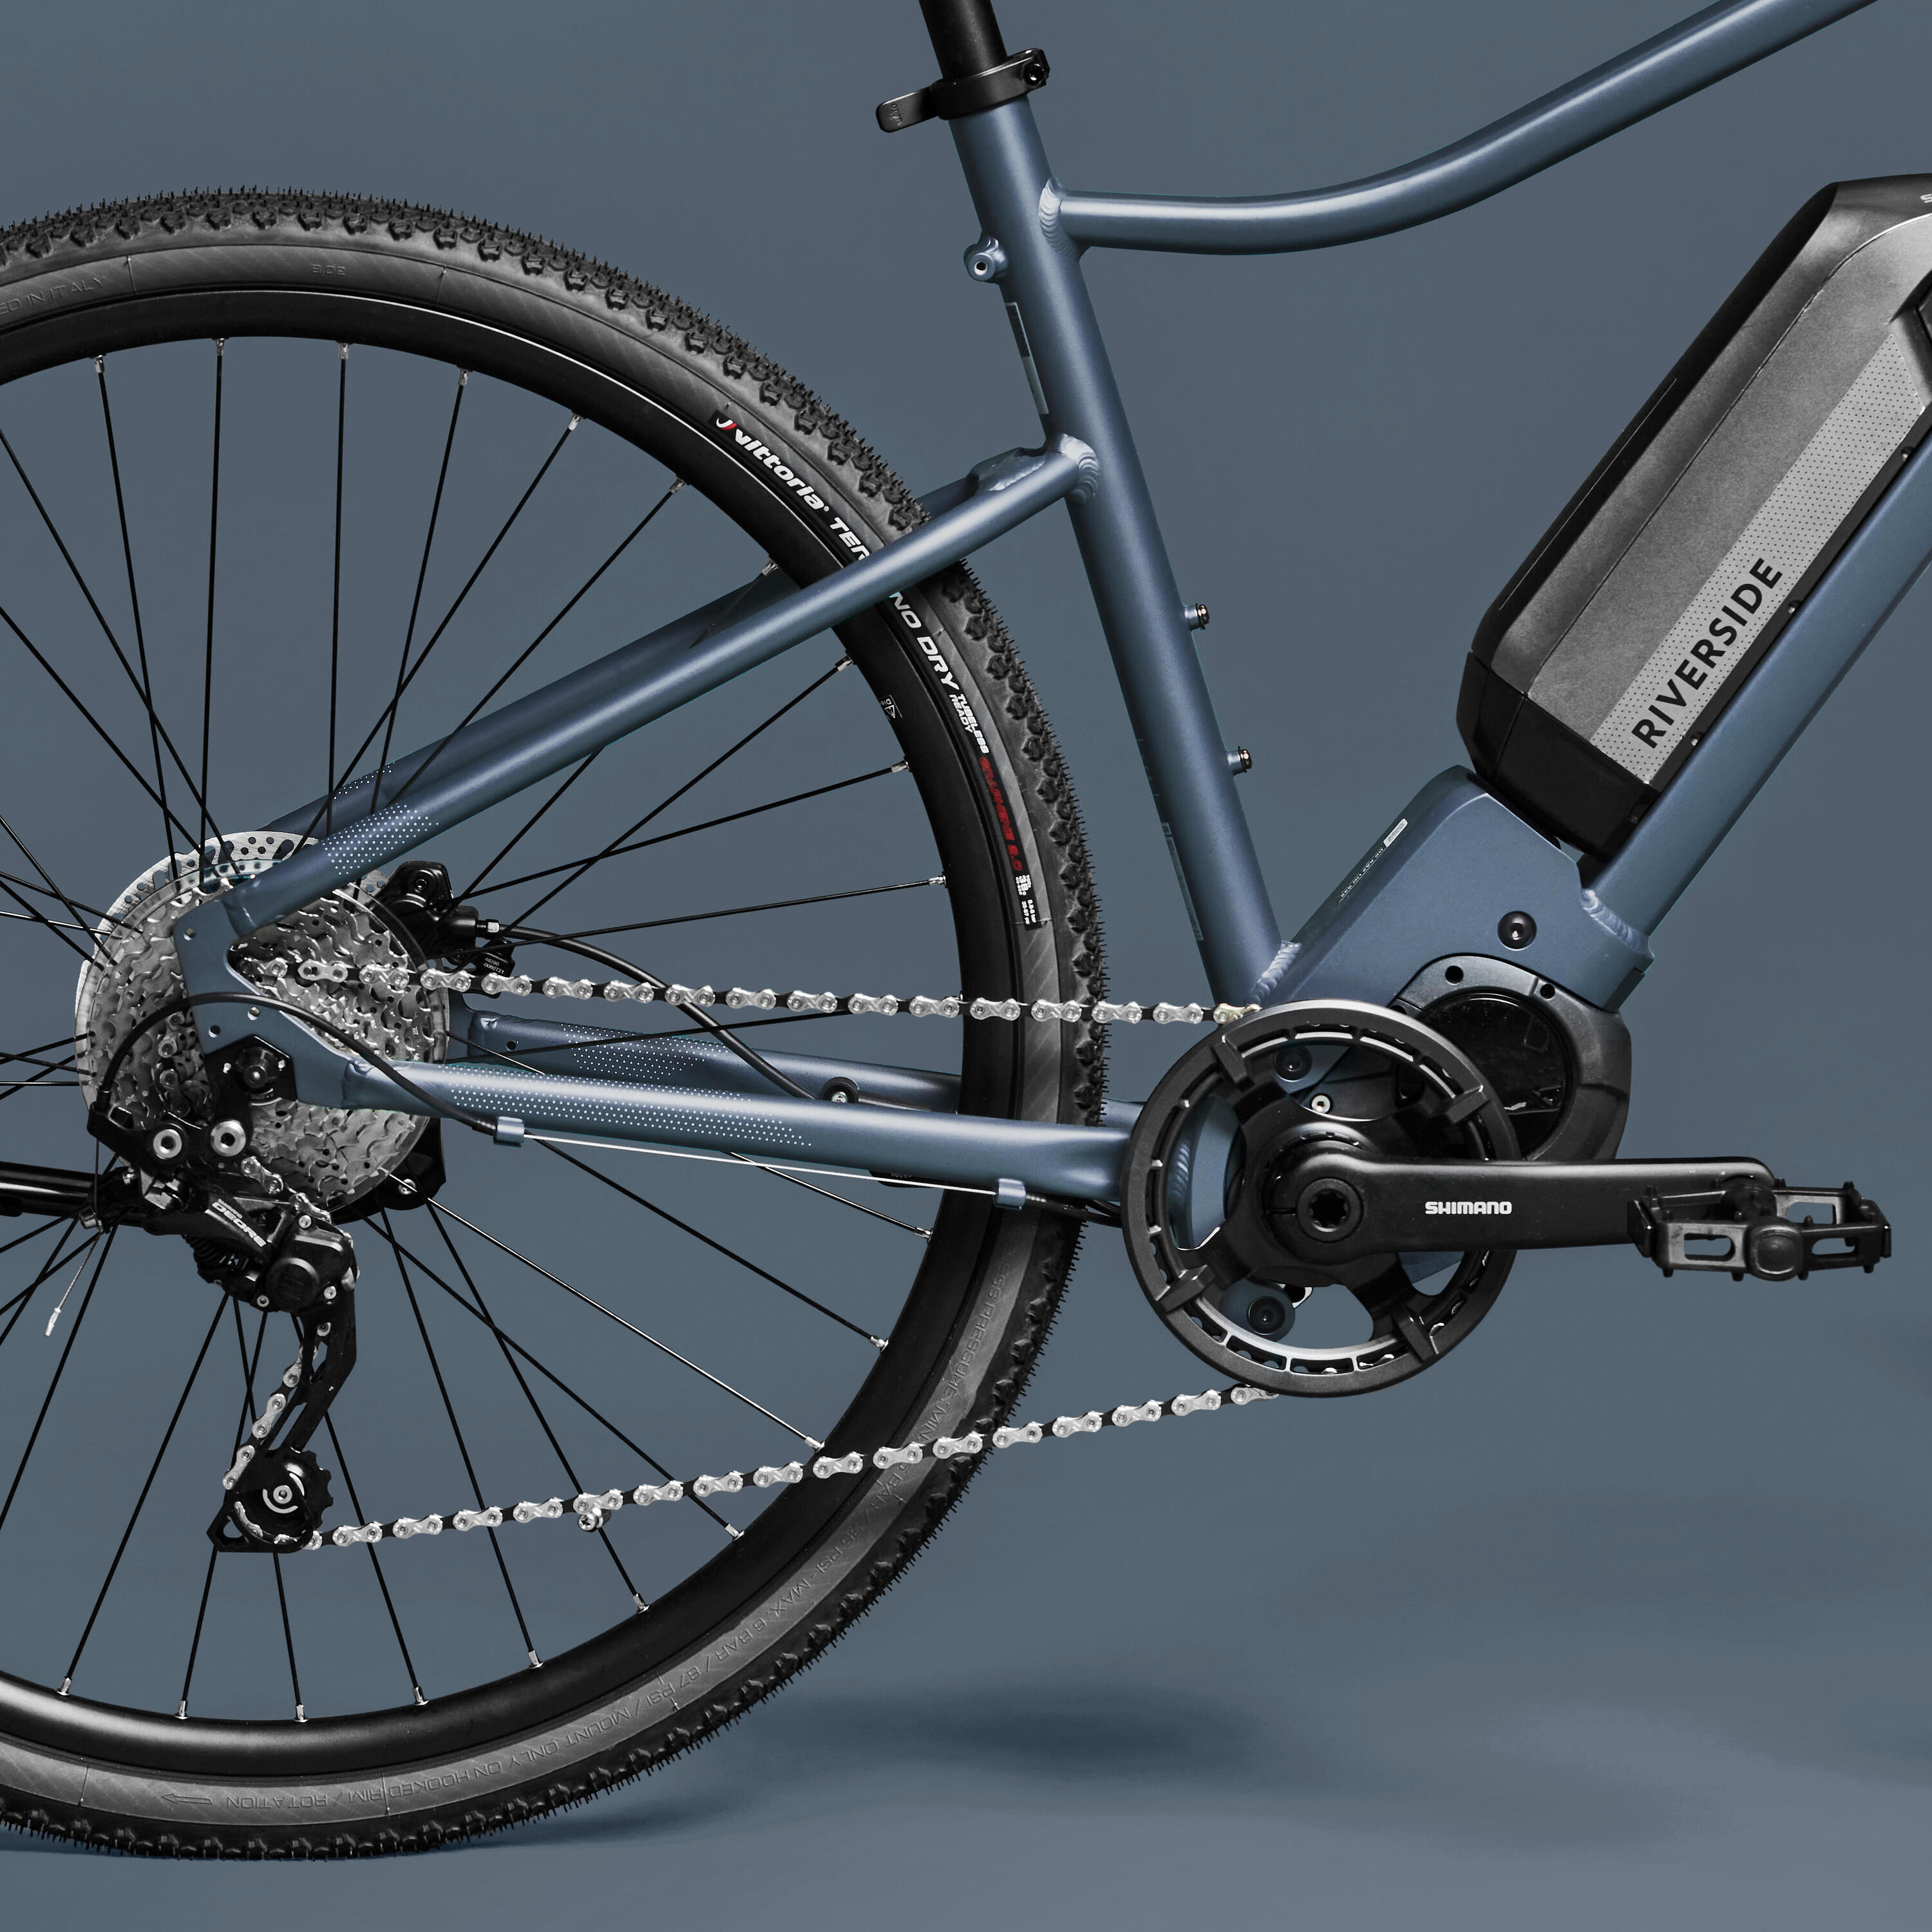 Shimano 60 Nm motor, long-distance electric hybrid bike, grey 6/23